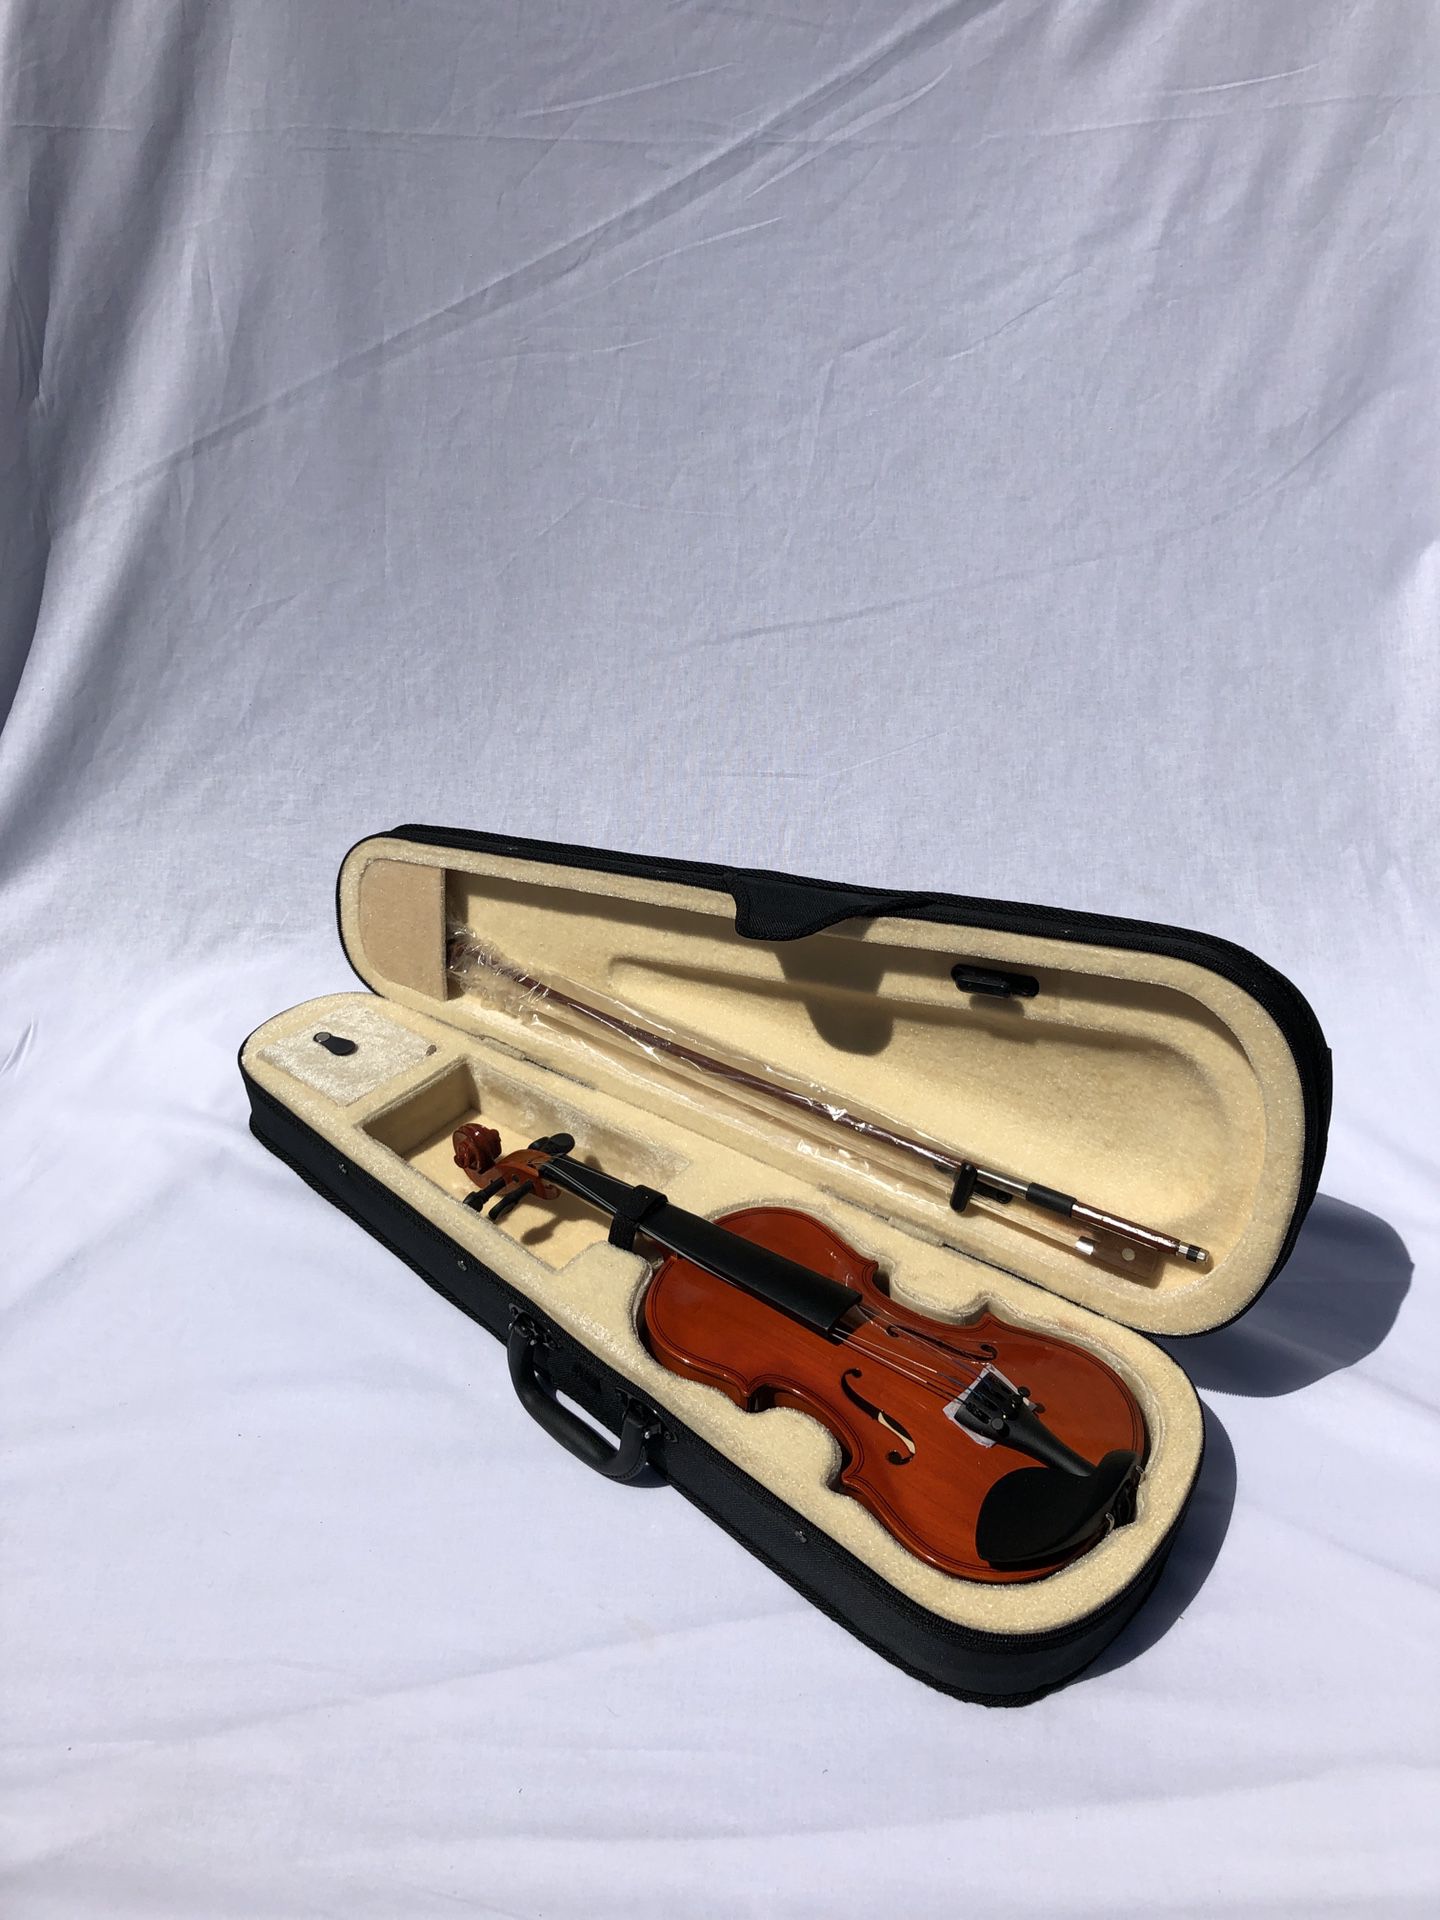 Brand new natural wood colored violin